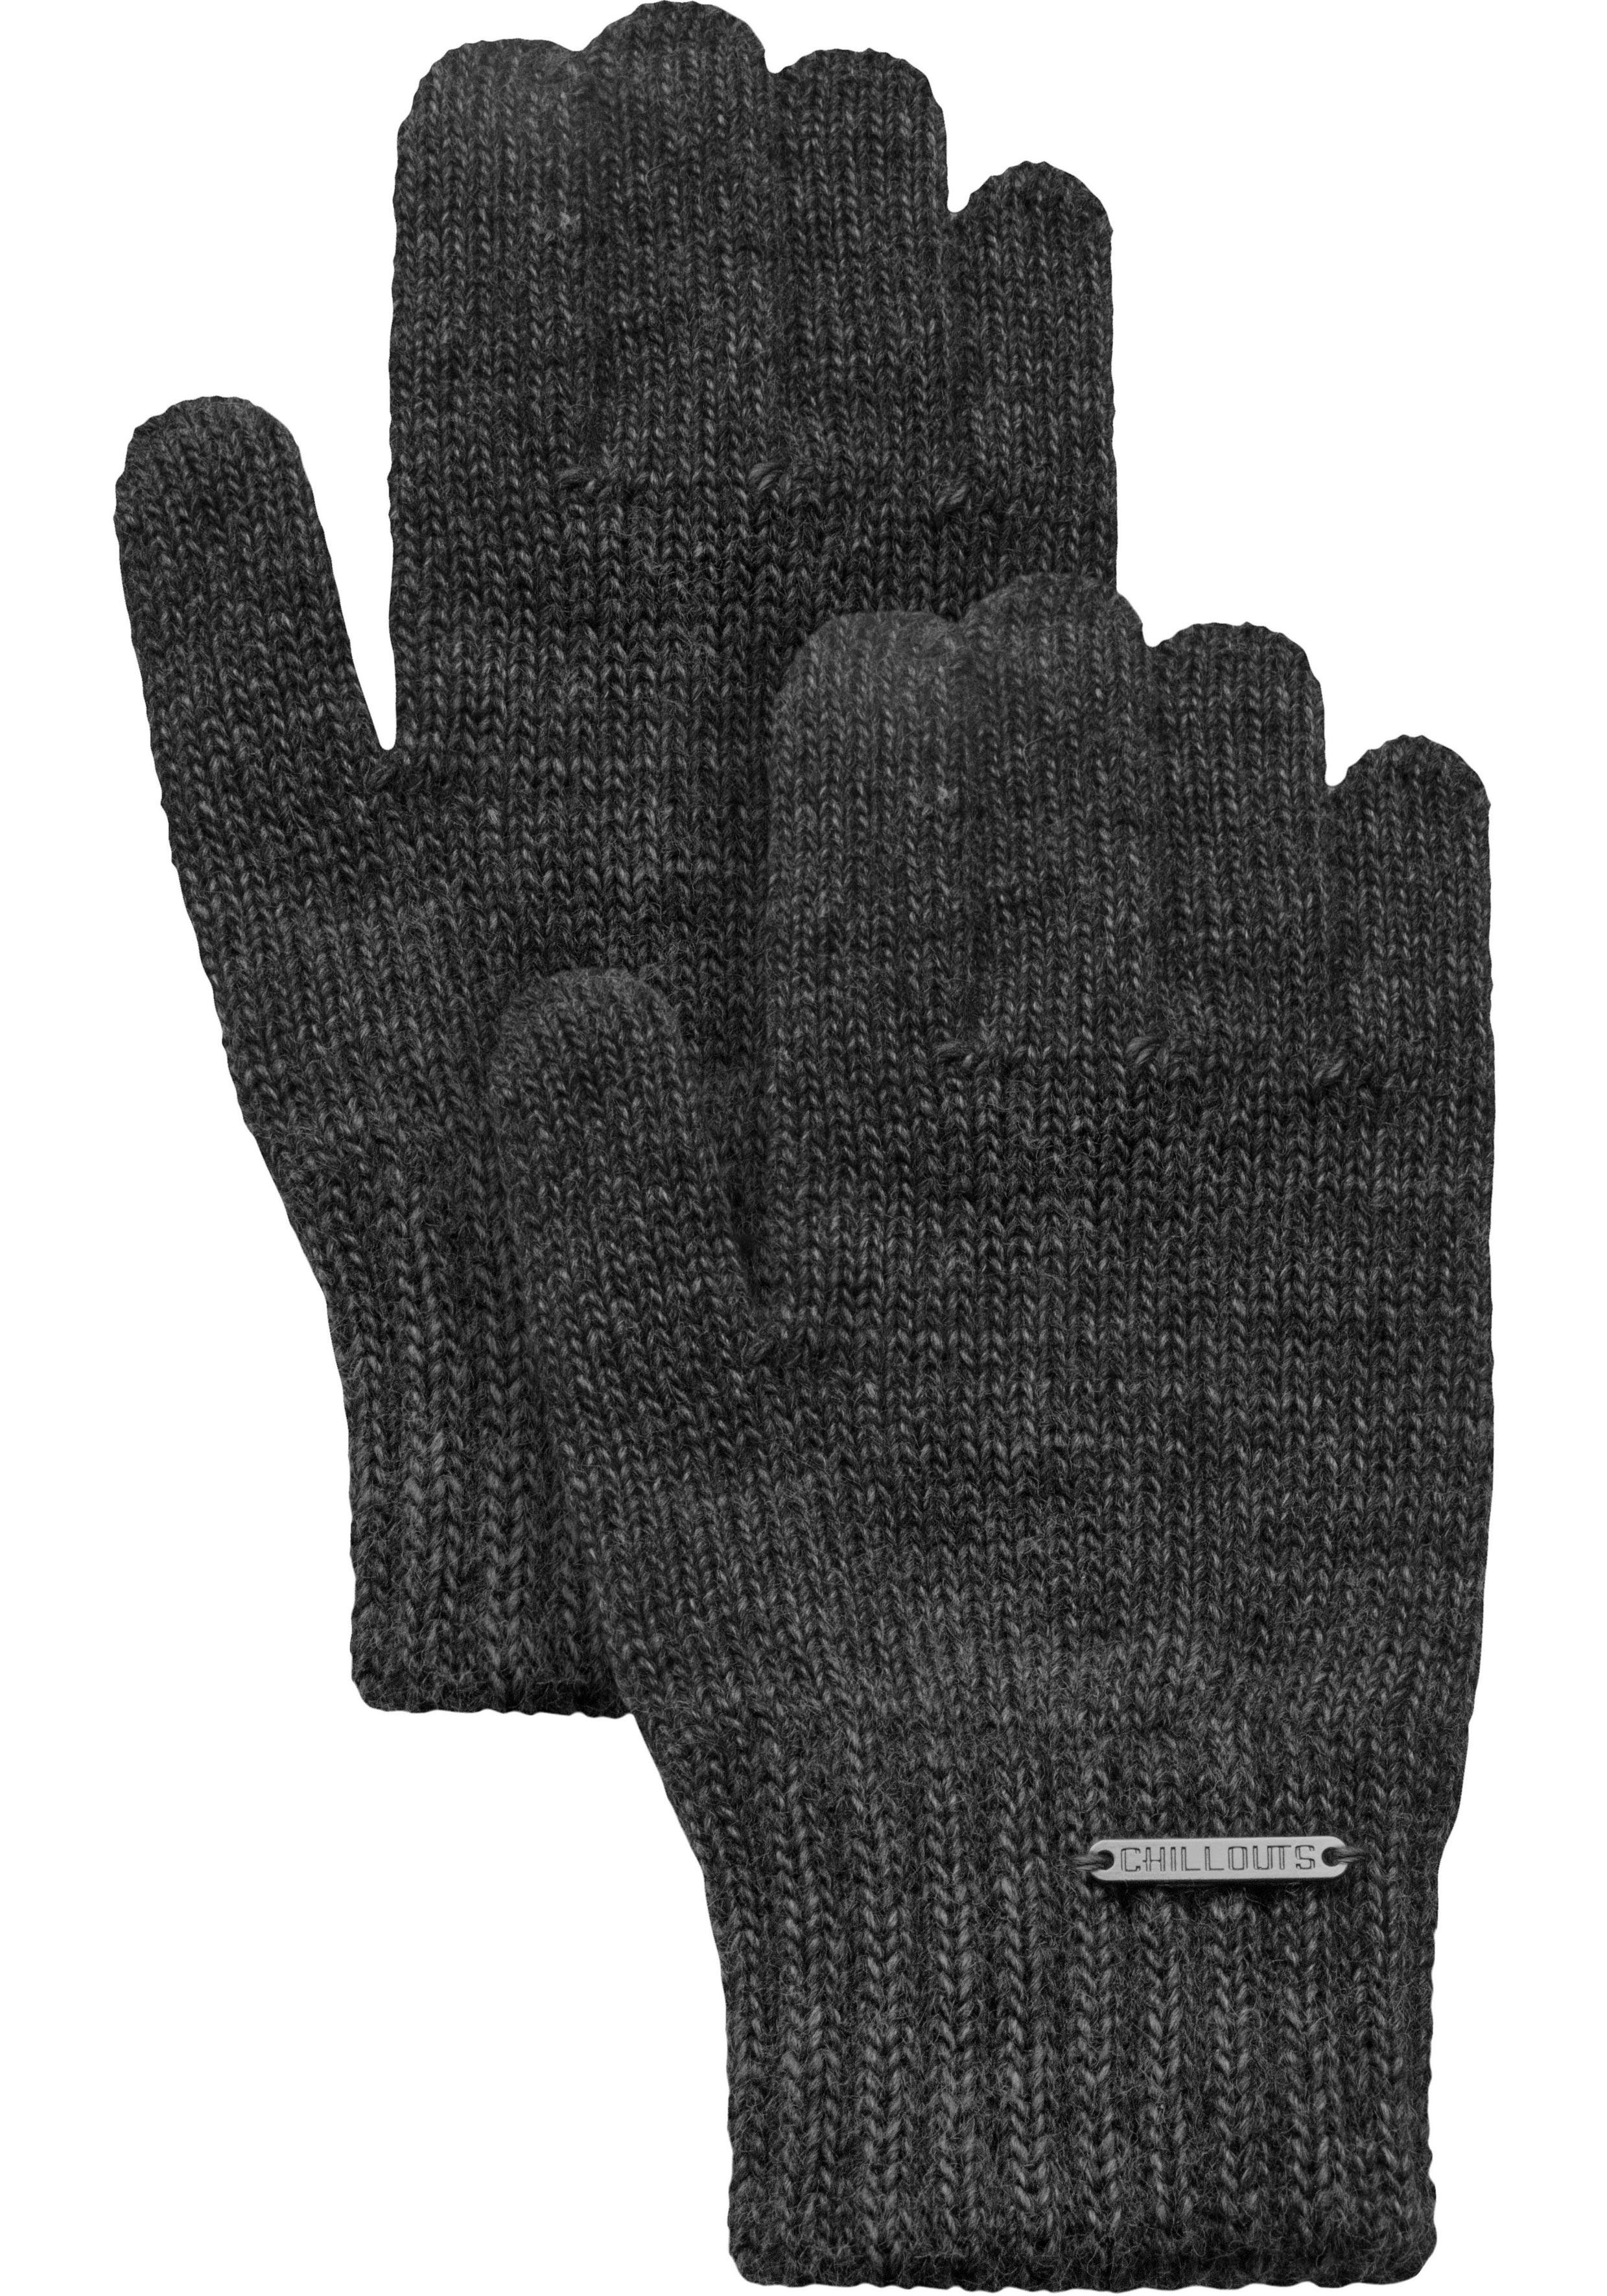 Glove gestrickt Strickhandschuhe Fingerhandschuhe, chillouts grey dark Jamila melange